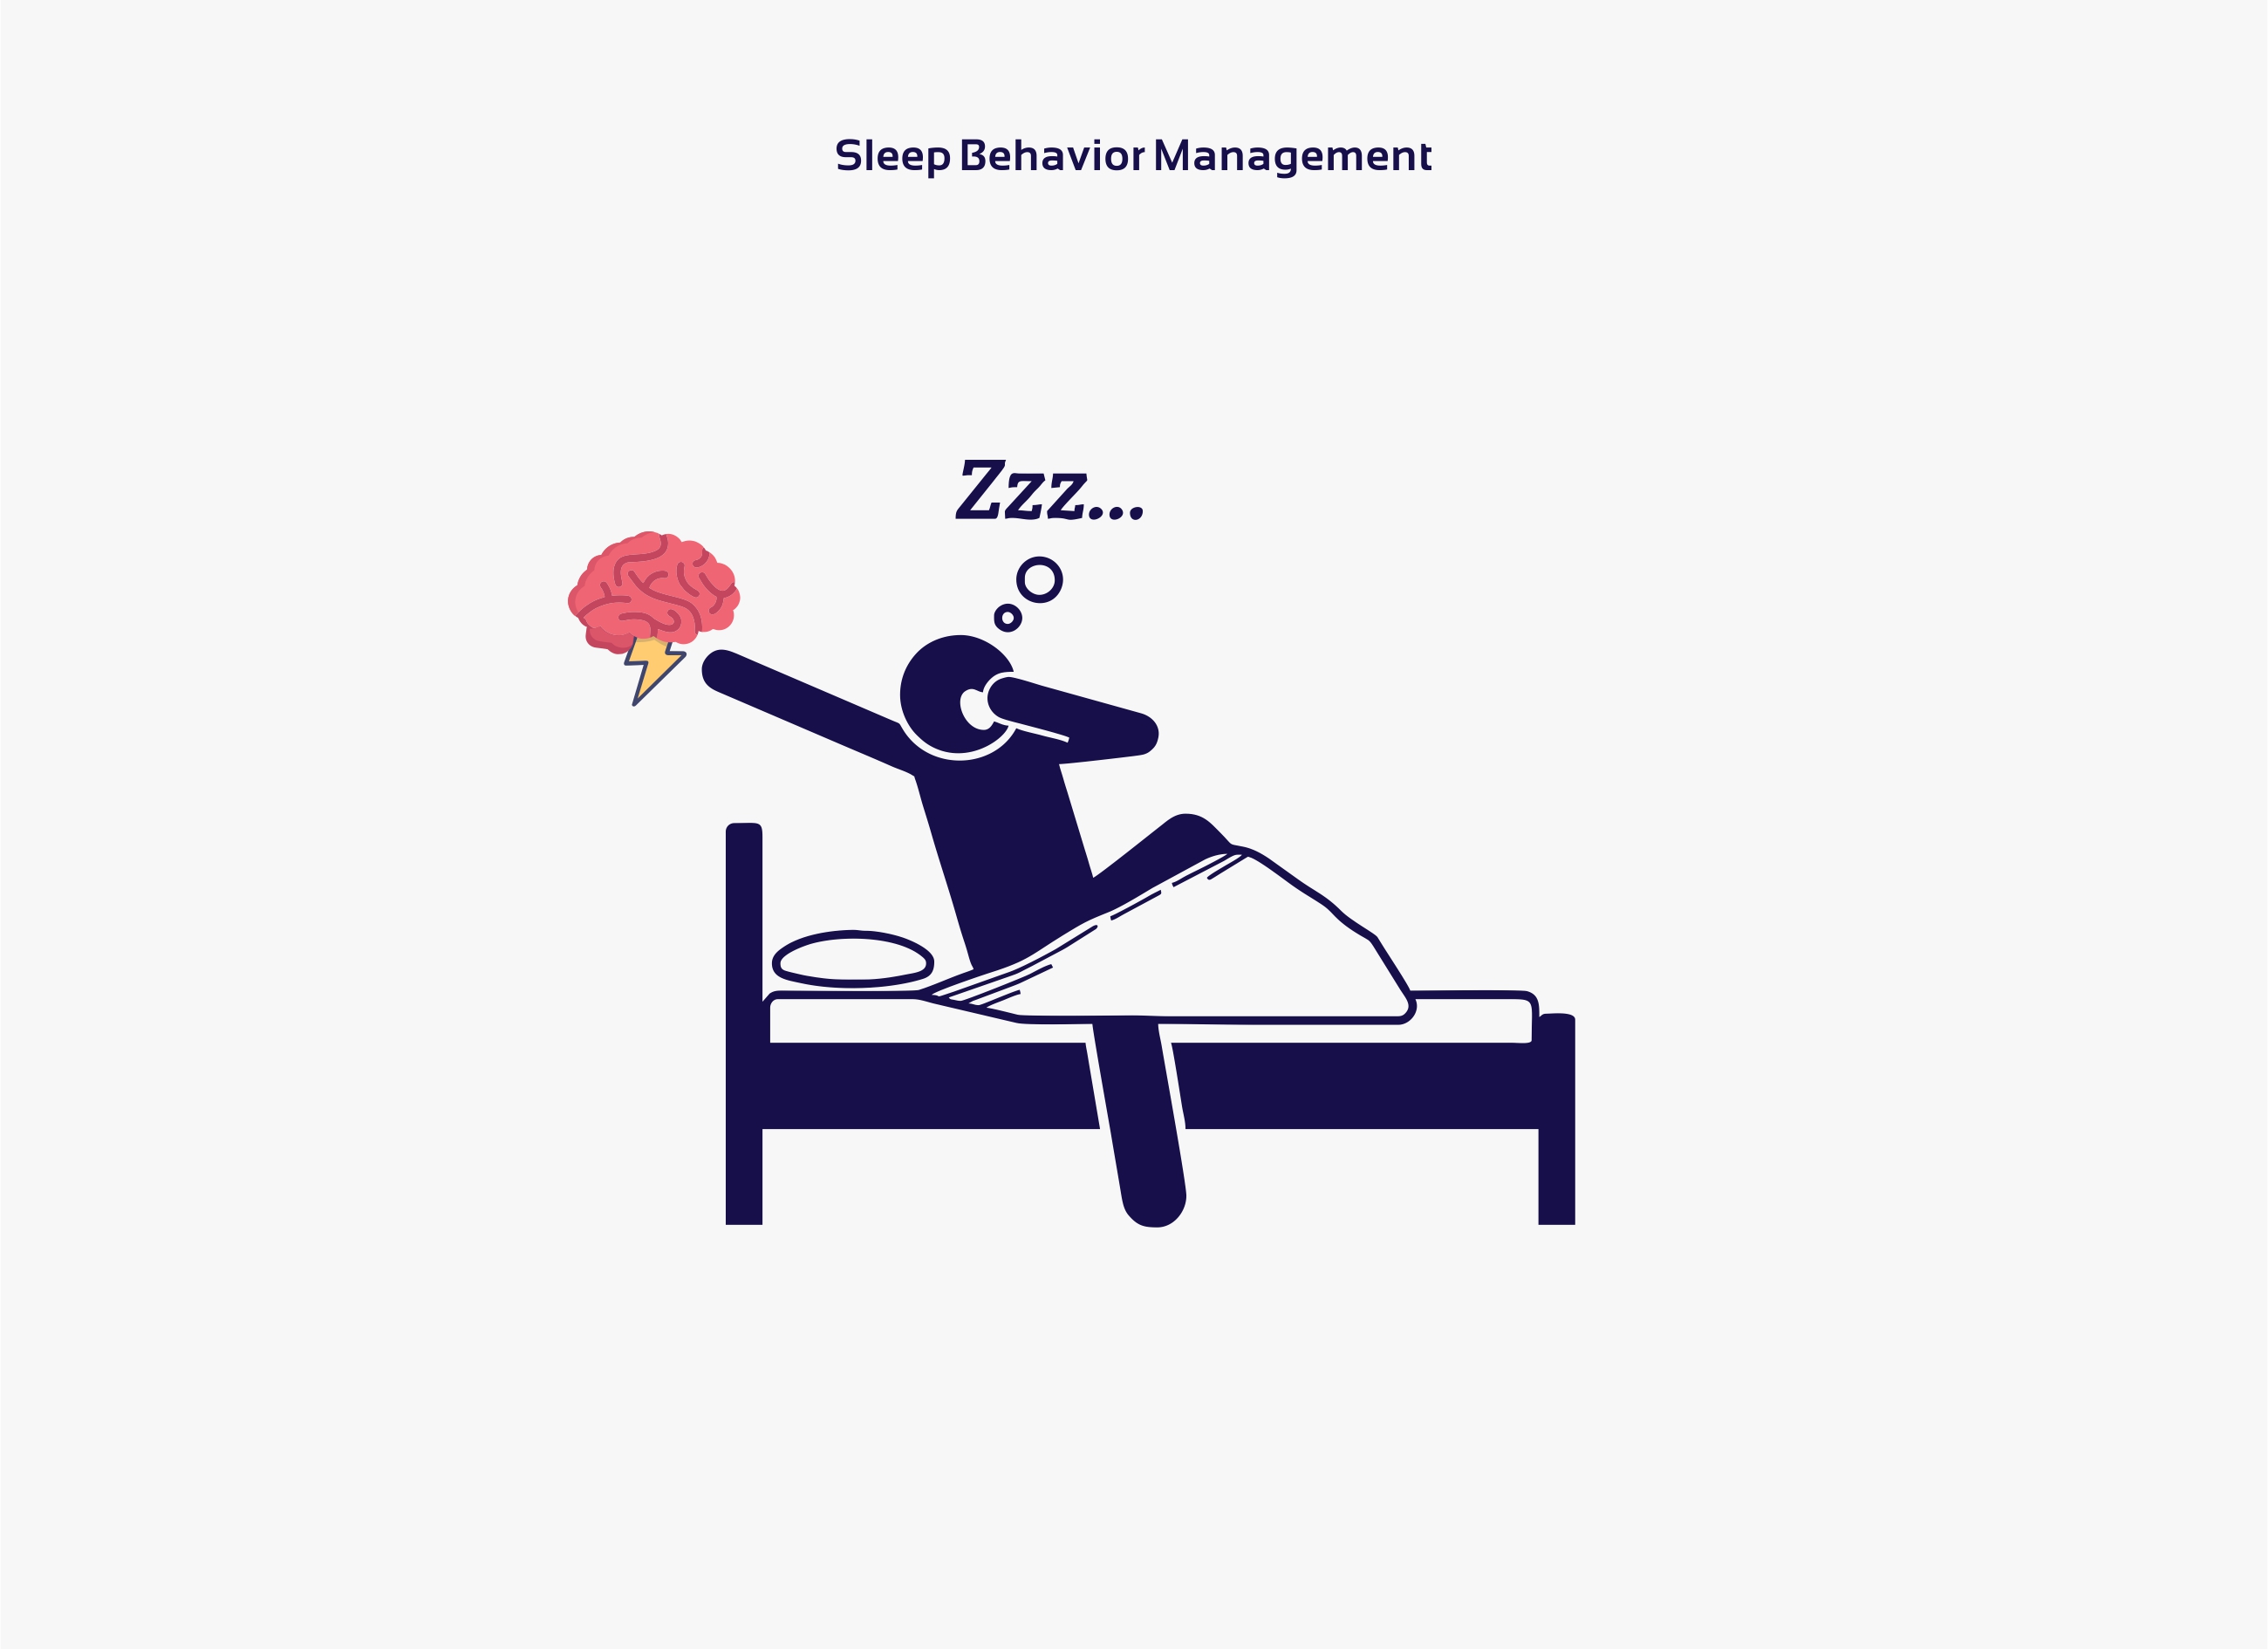 Sleep behavior